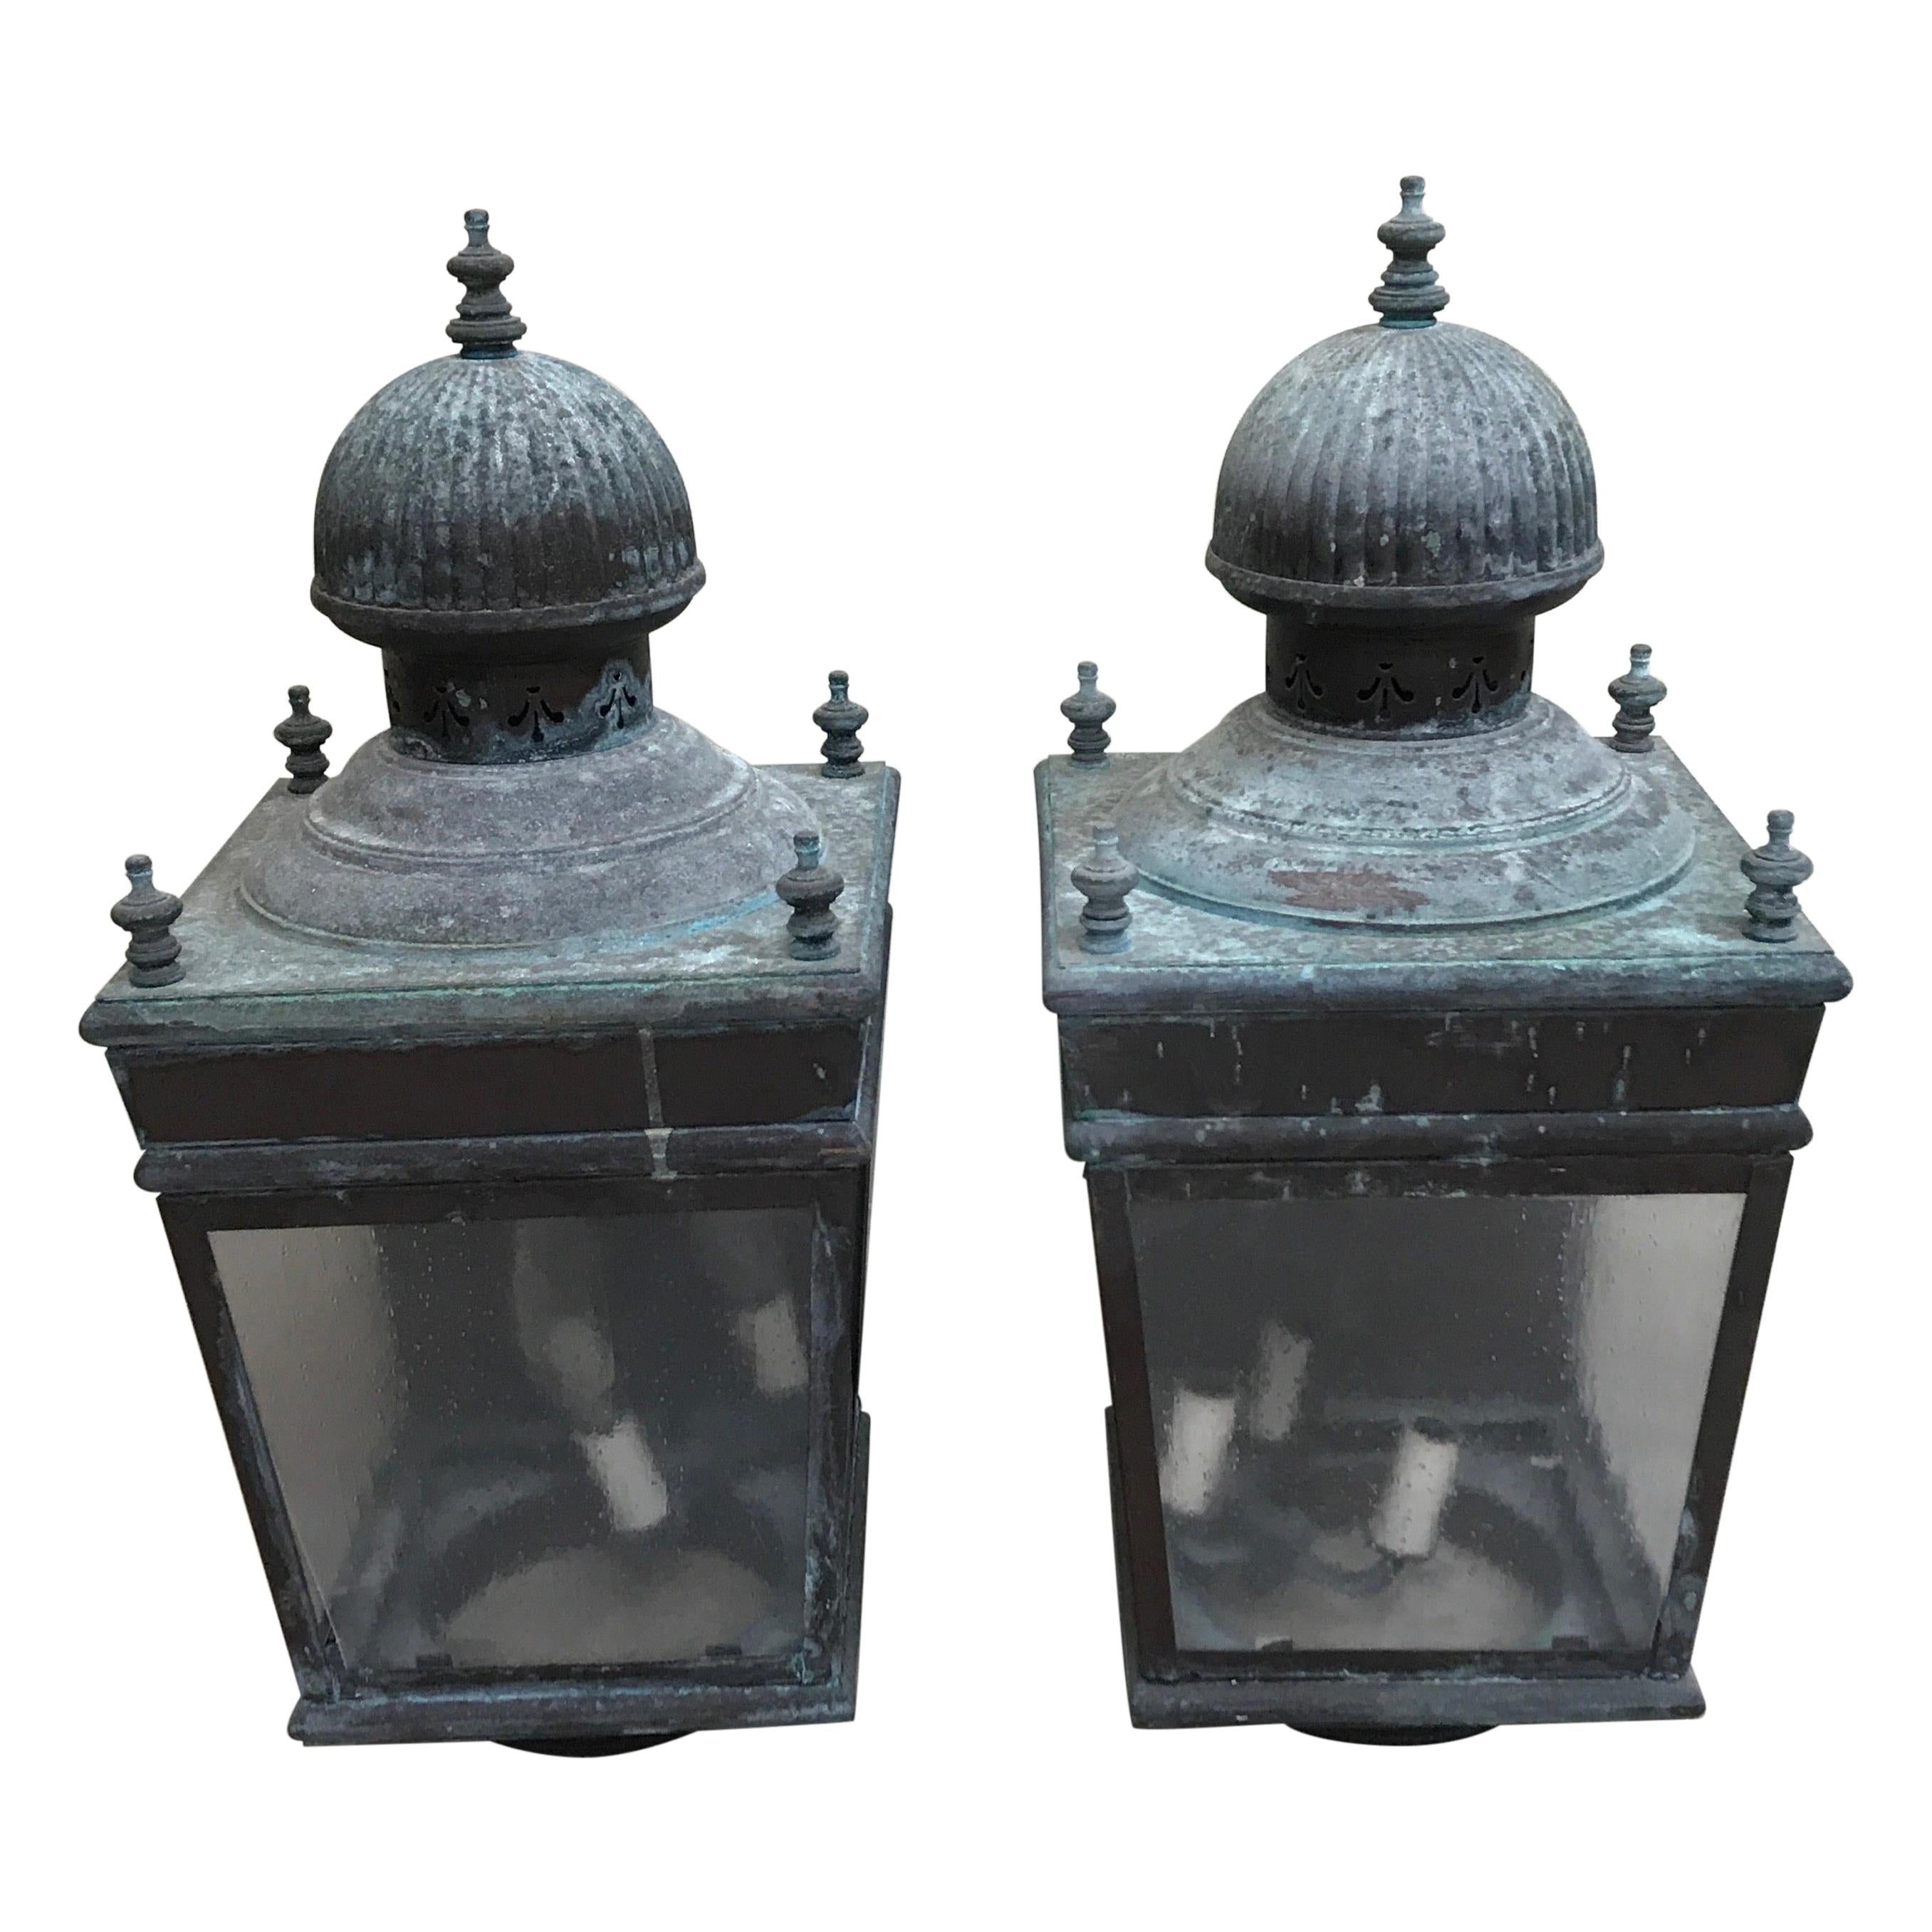 Pair of Vintage Exterior Lanterns